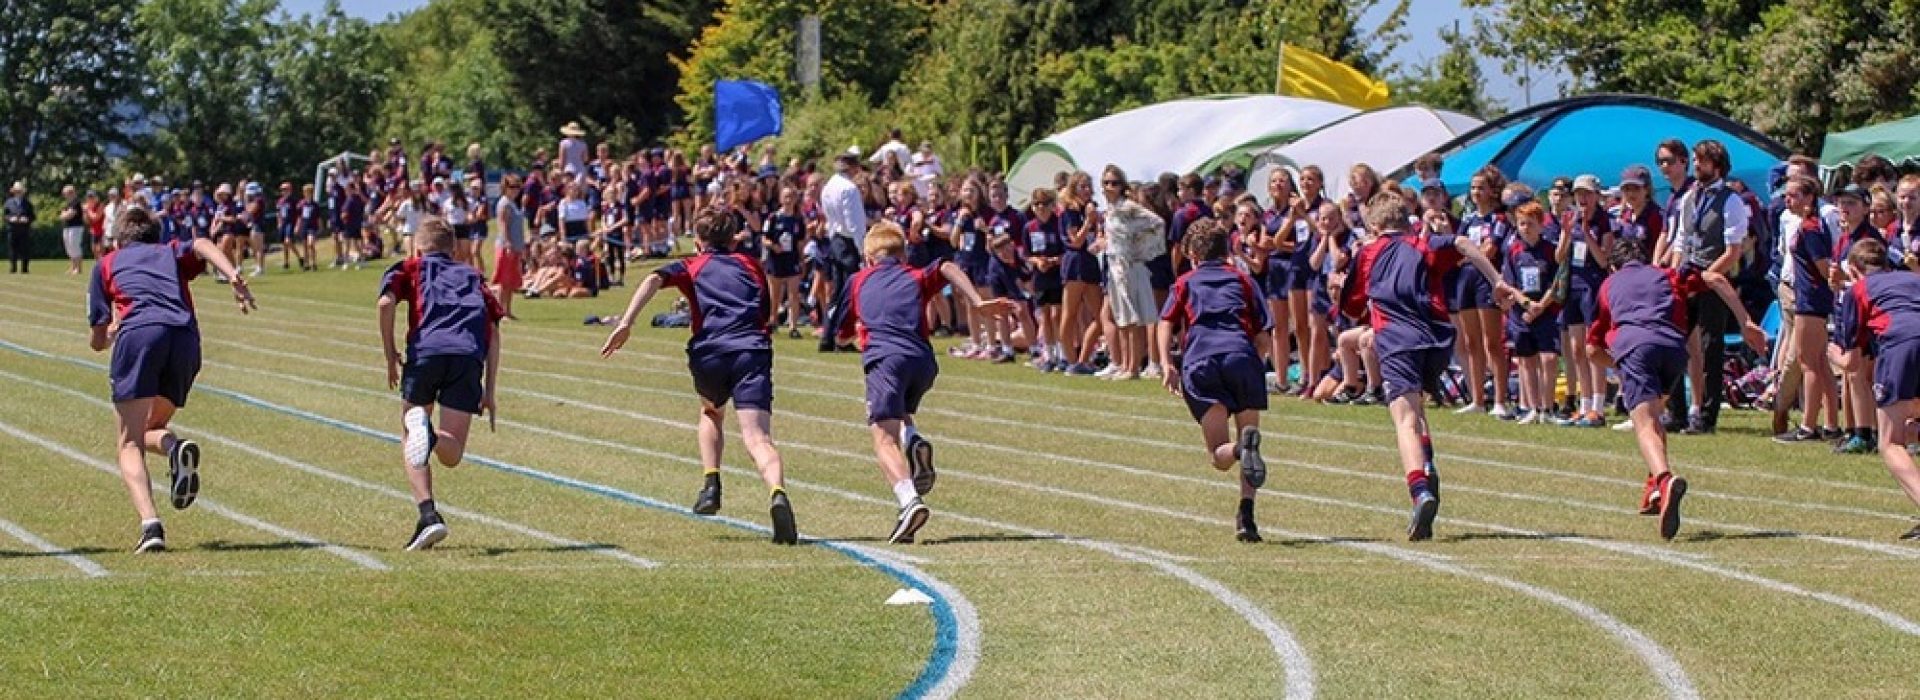 Churston Ferrers Grammar School Sports Day 2019